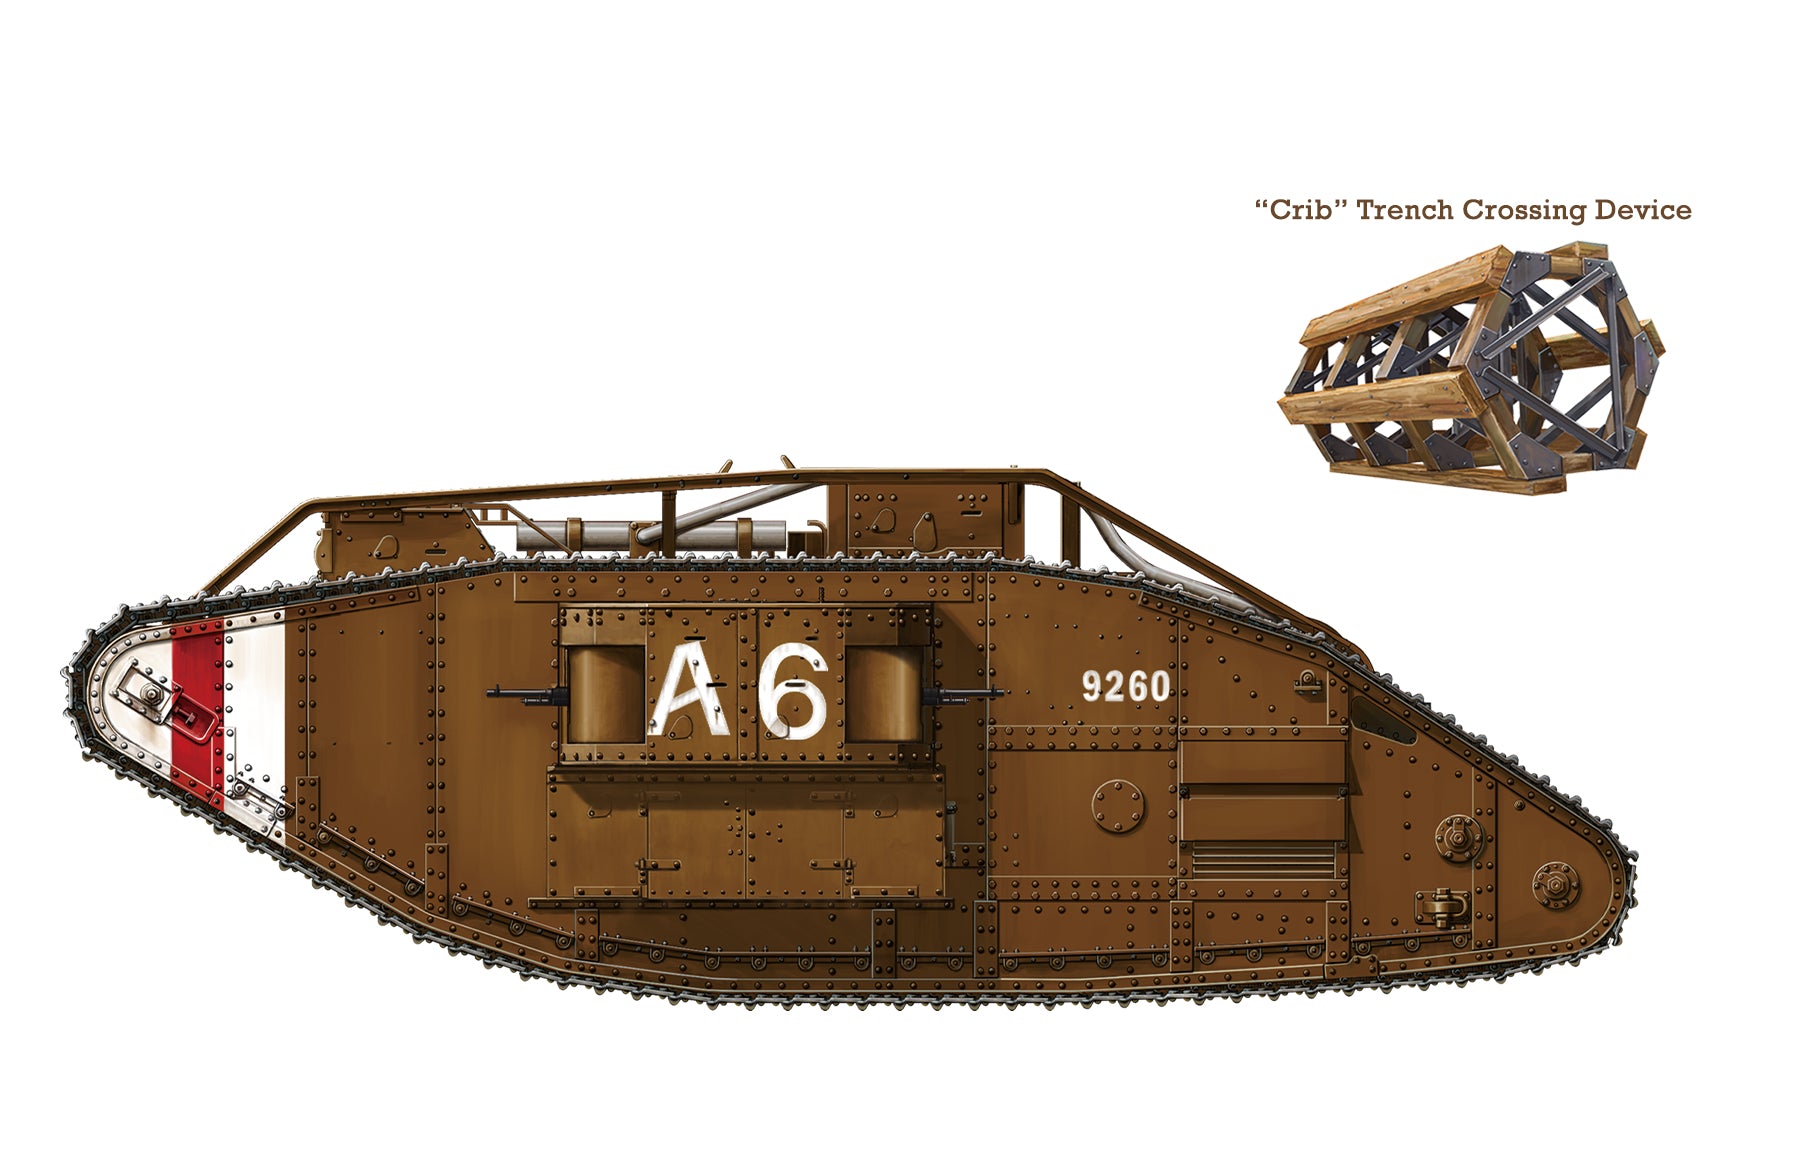 TS-029 - Meng 1/35 British Heavy Tank MK.V Female